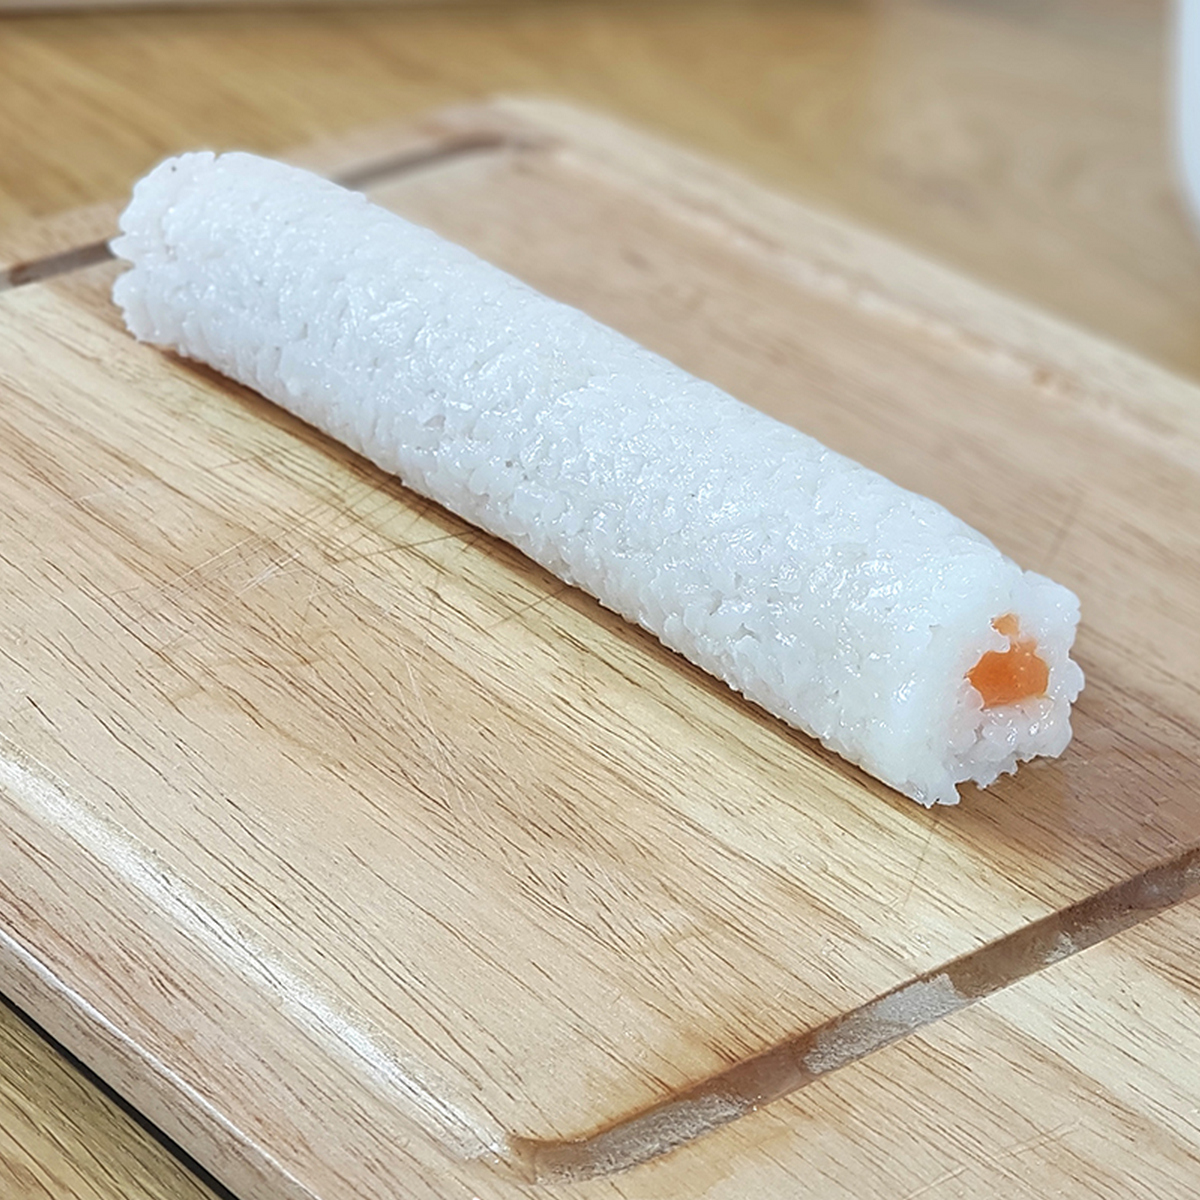 cookut coffret-sushi-maki-faciles ustensile de cuisine une idee cadeau chez ugo et lea (9)